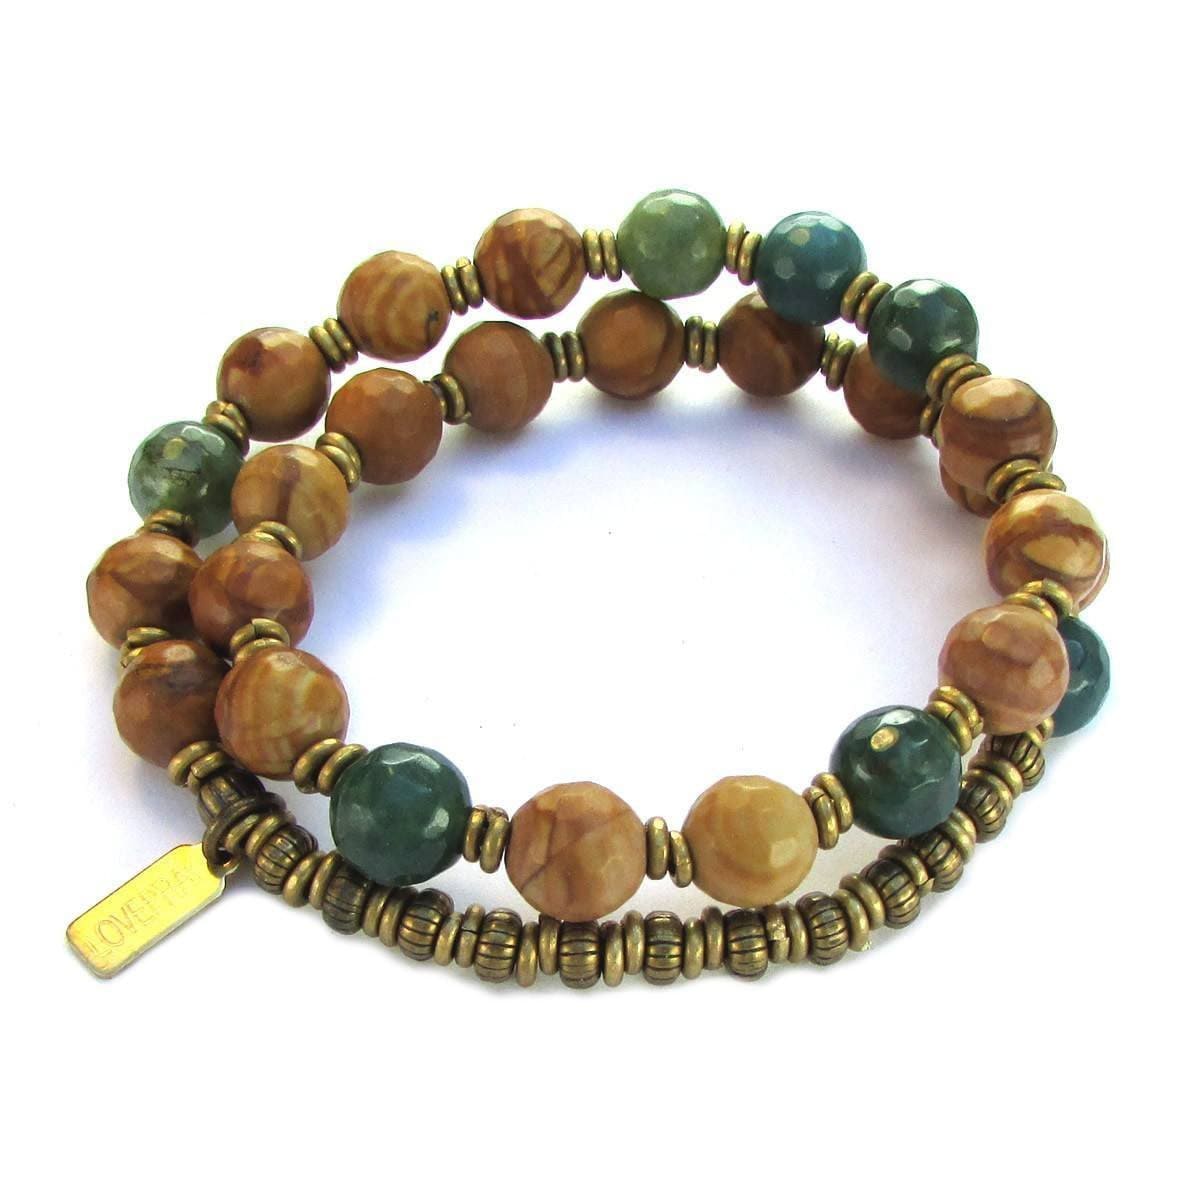 Bracelets - "Abundance And Protection" 27 Bead Wrap Mala Bracelet, Moss Agate And Jasper